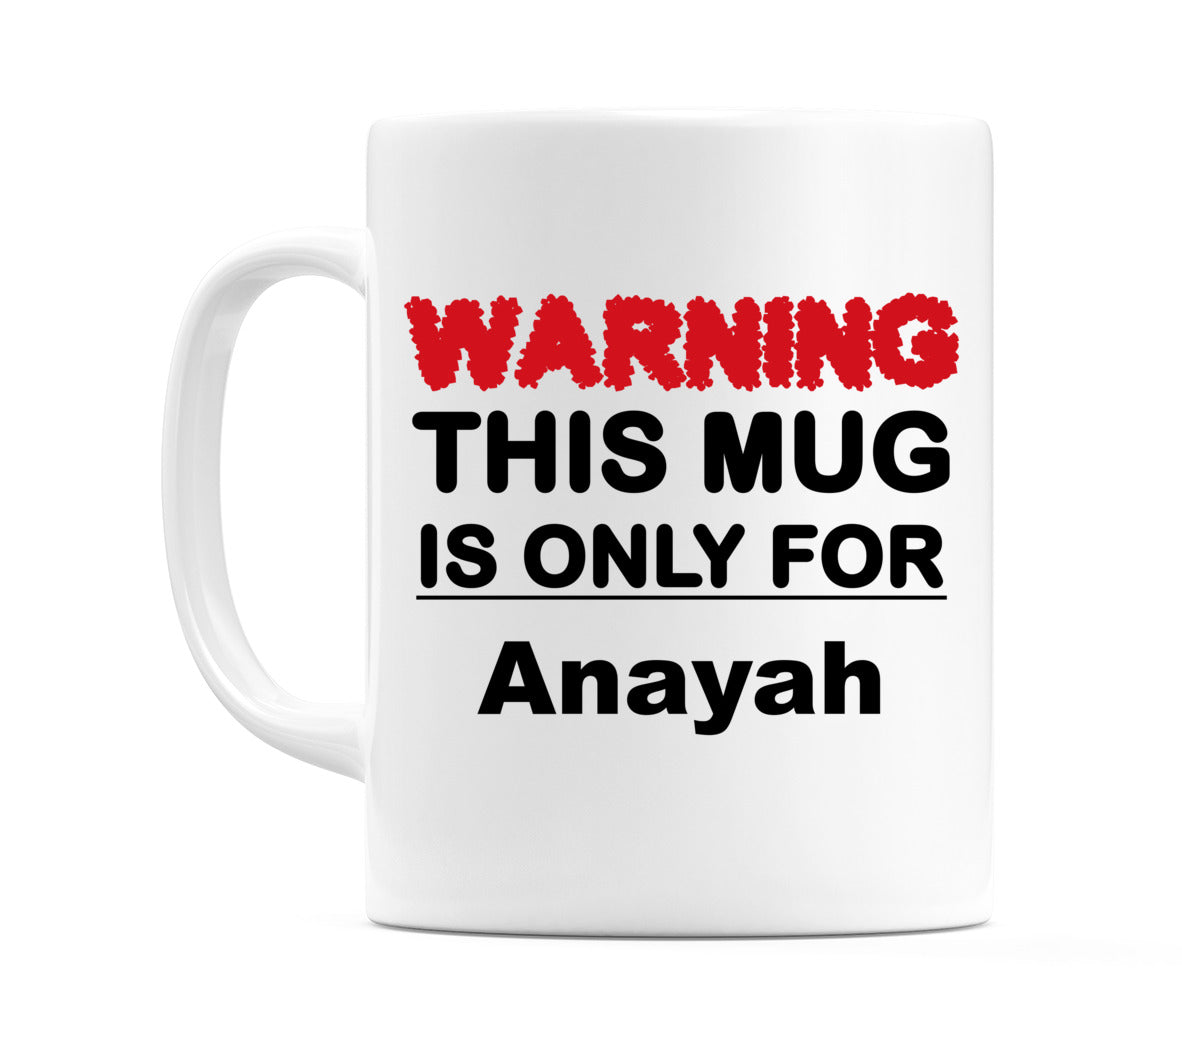 Warning This Mug is ONLY for Anayah Mug